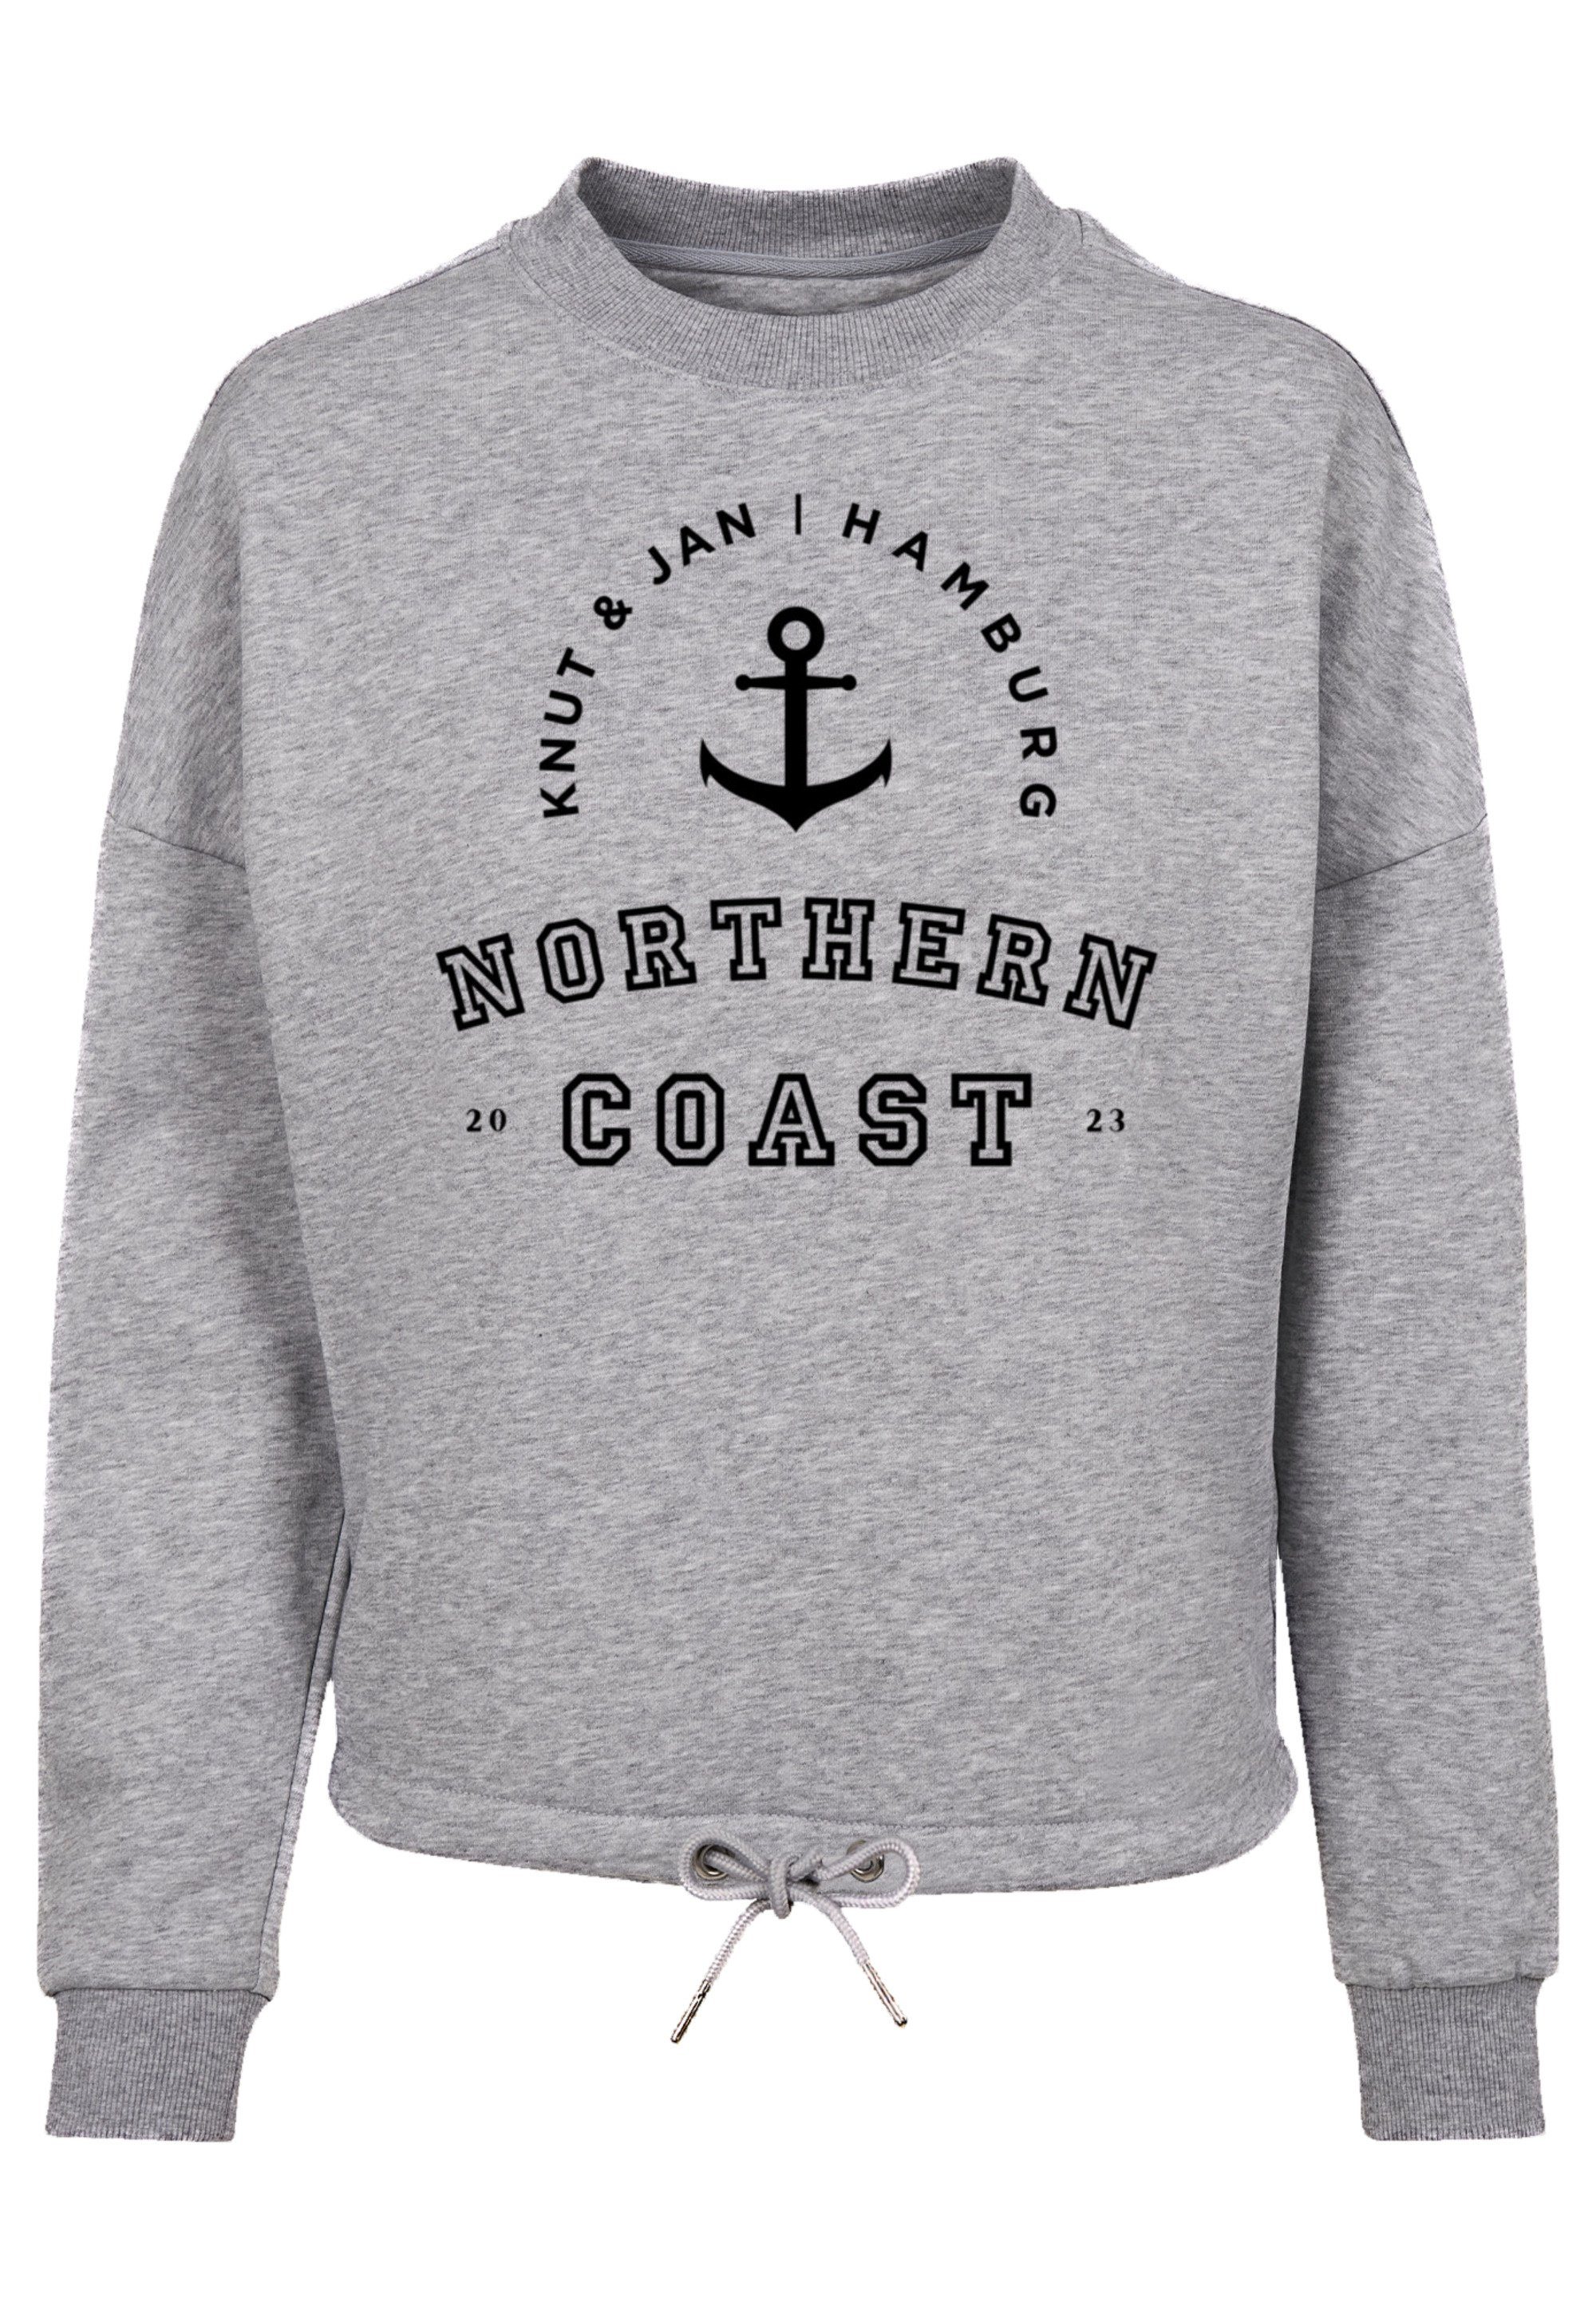 Hamburg & Sweatshirt Print F4NT4STIC Knut grey Jan Coast Northern heather